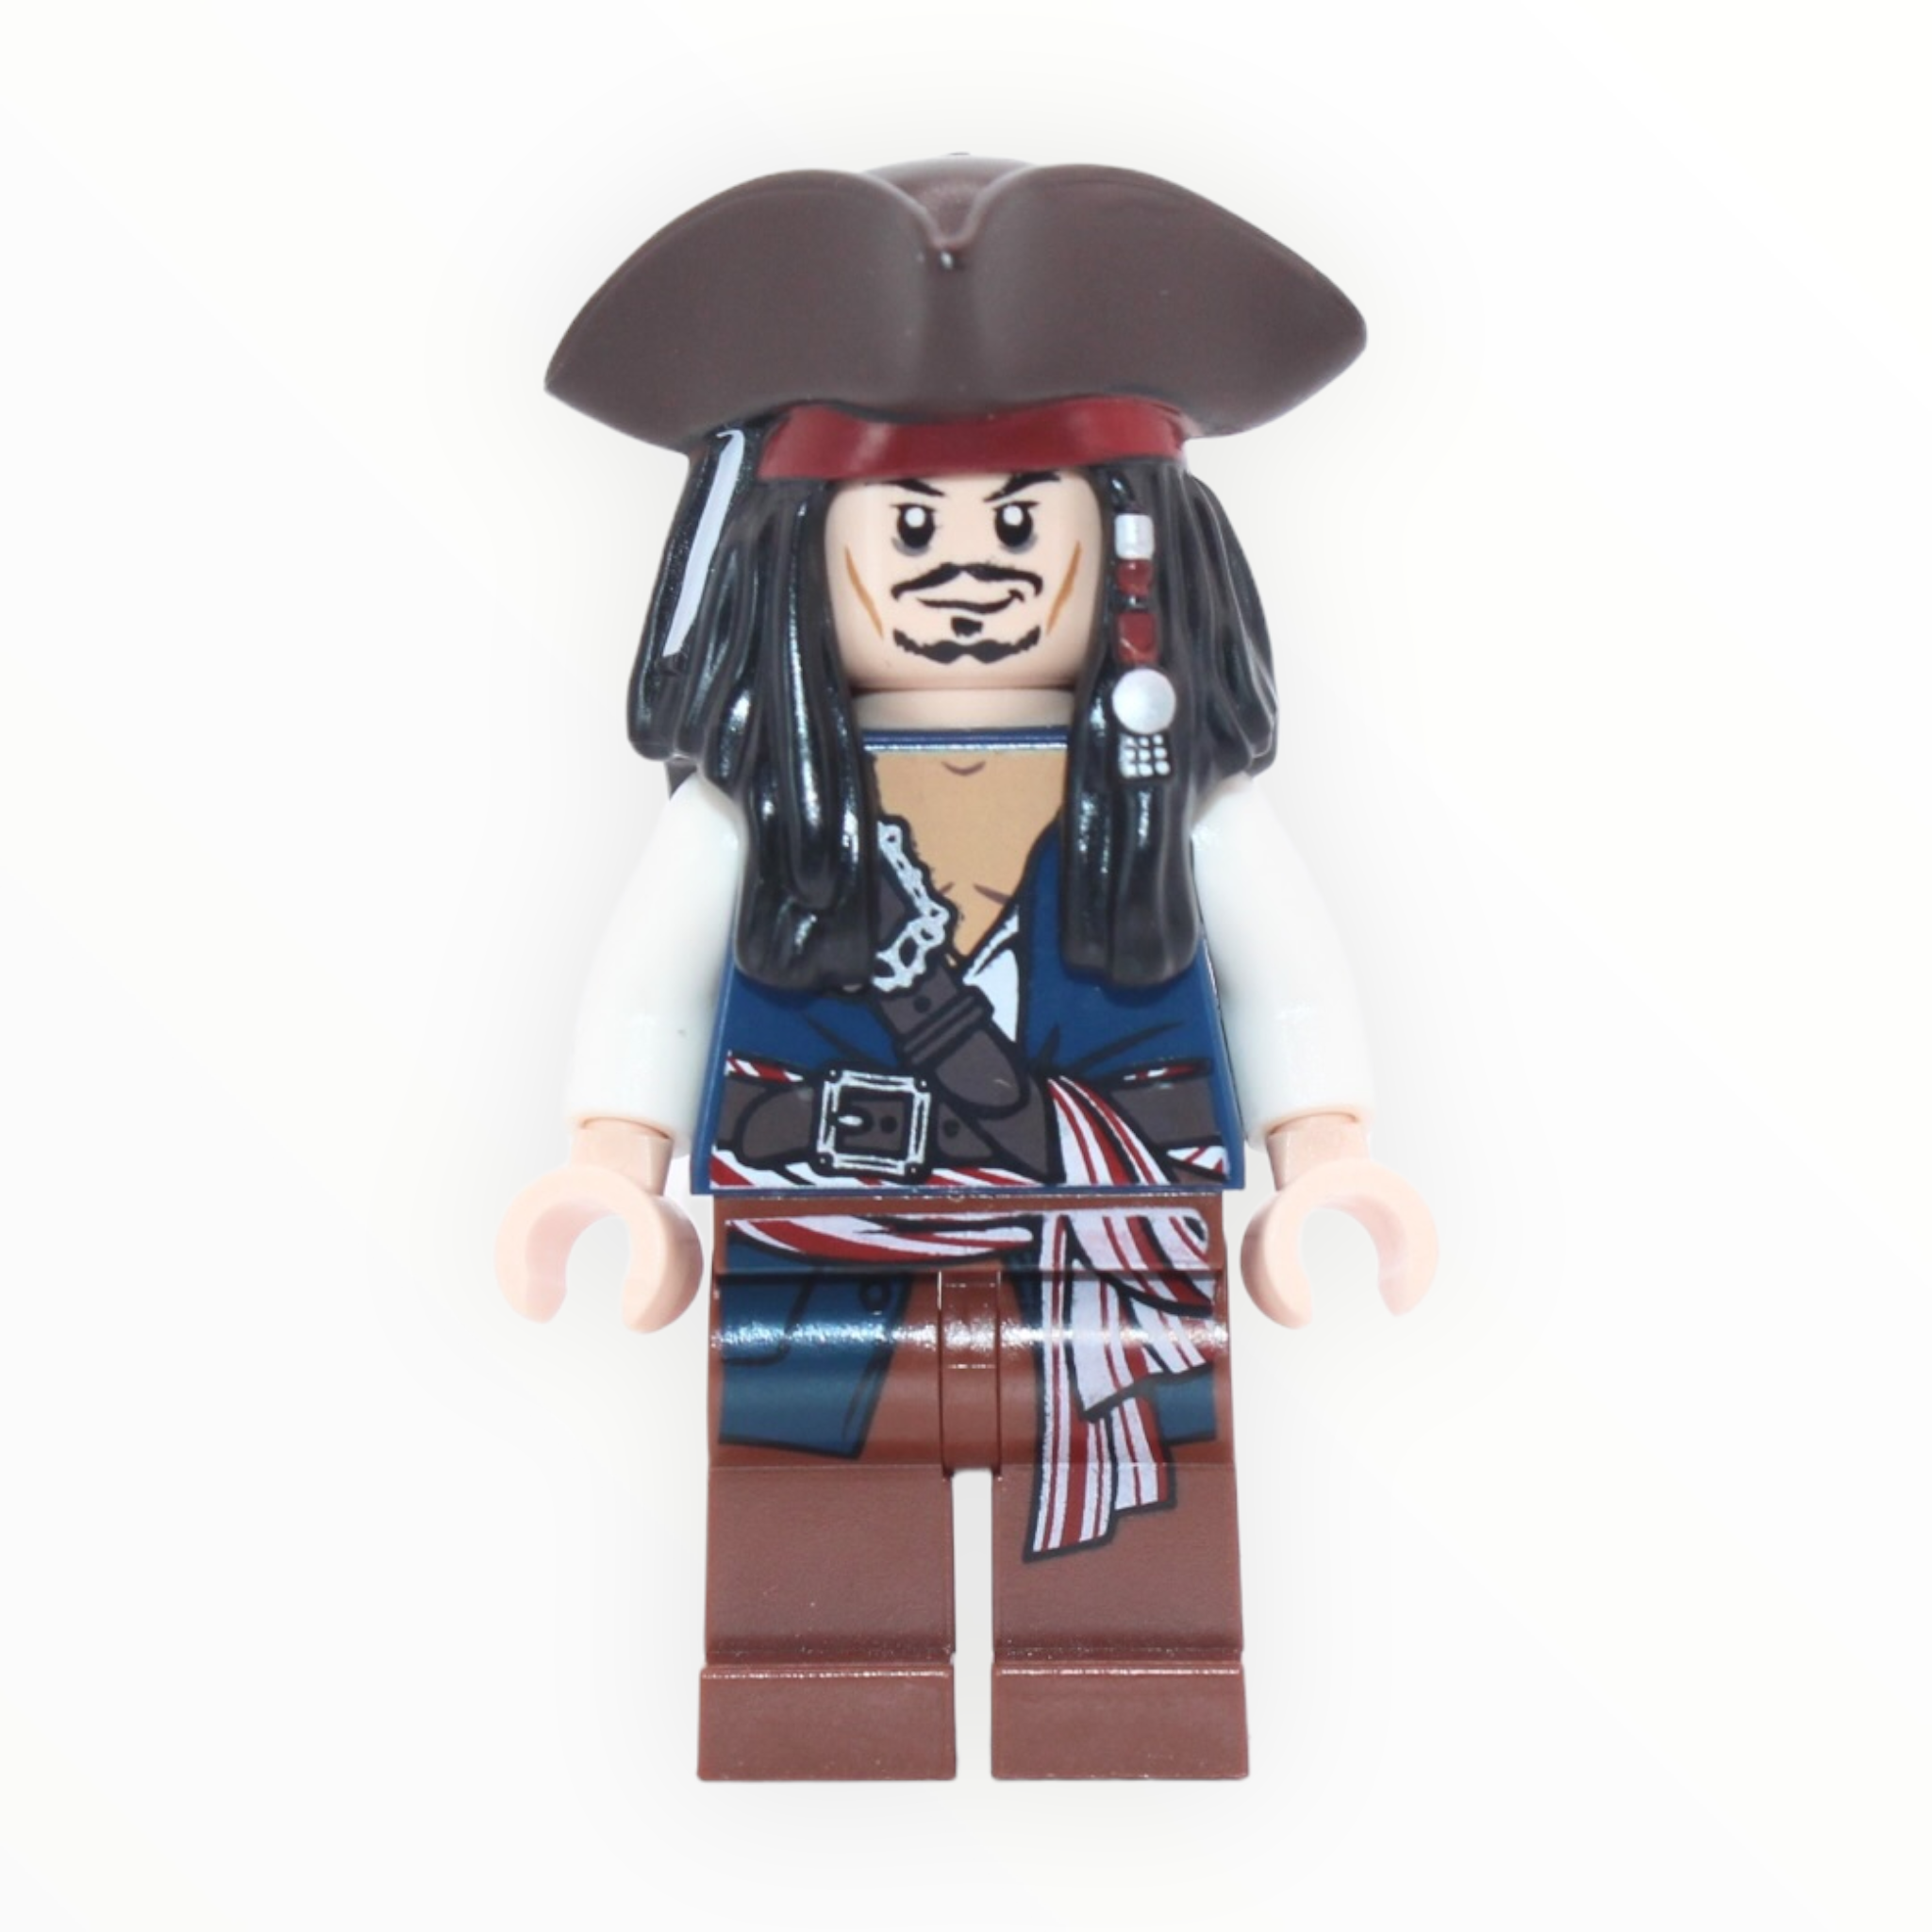 Captain Jack Sparrow (tricorne hat, smile / scared)